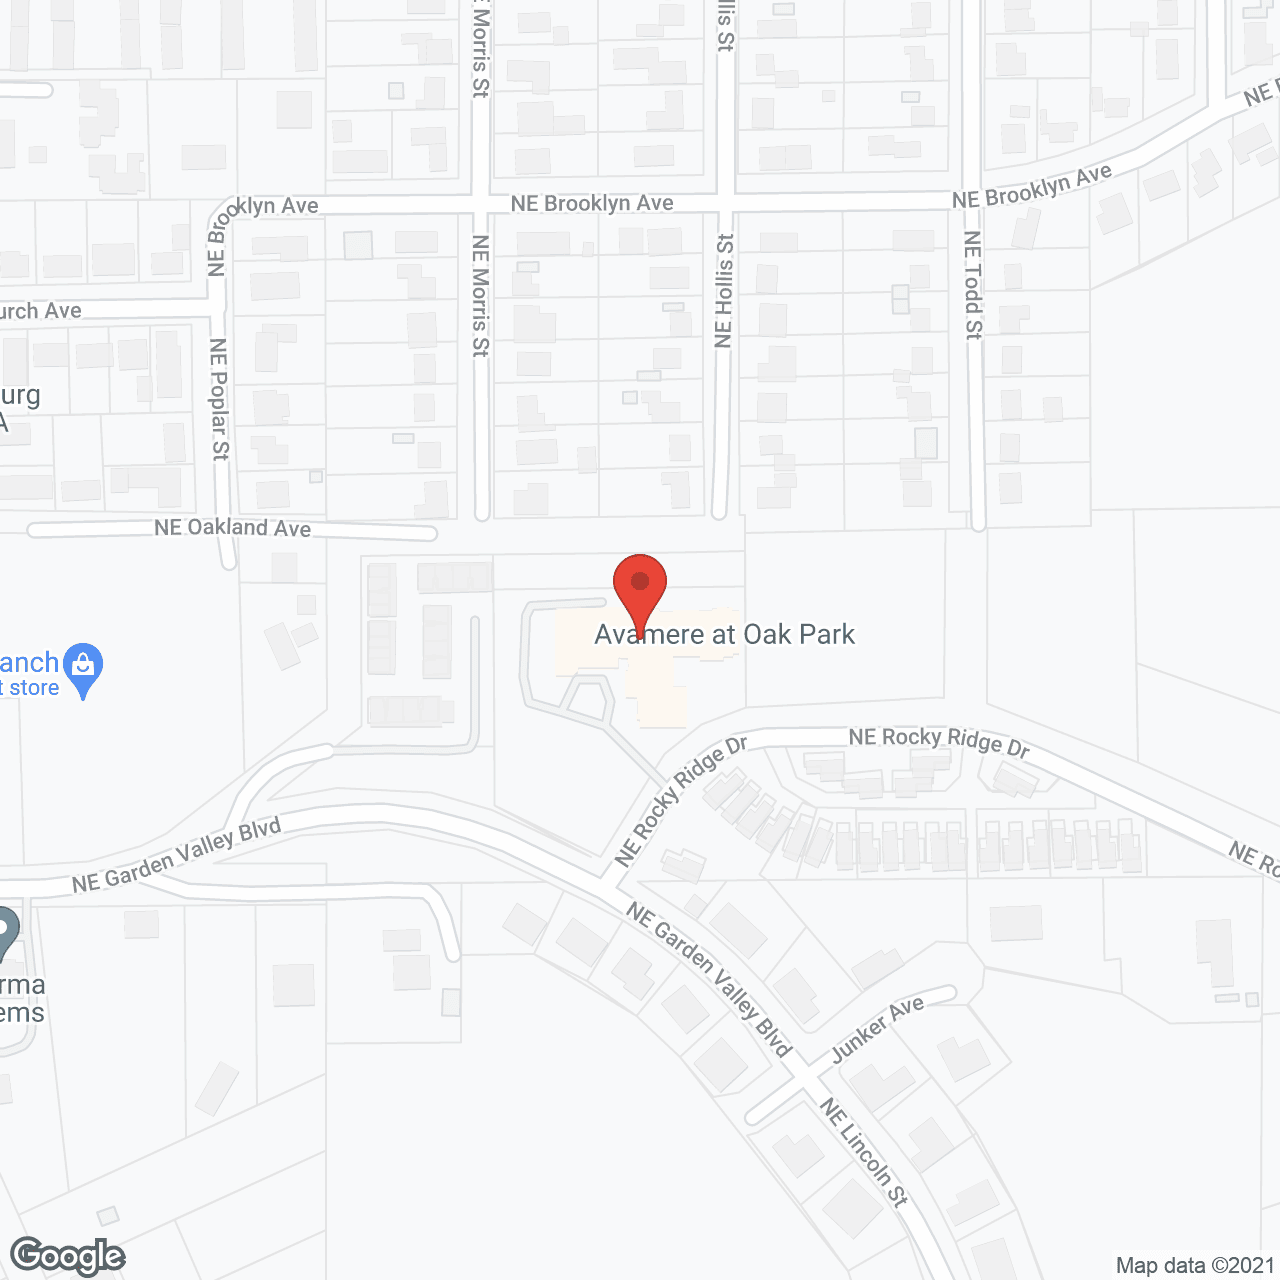 Avamere at Oak Park (Roseburg) in google map